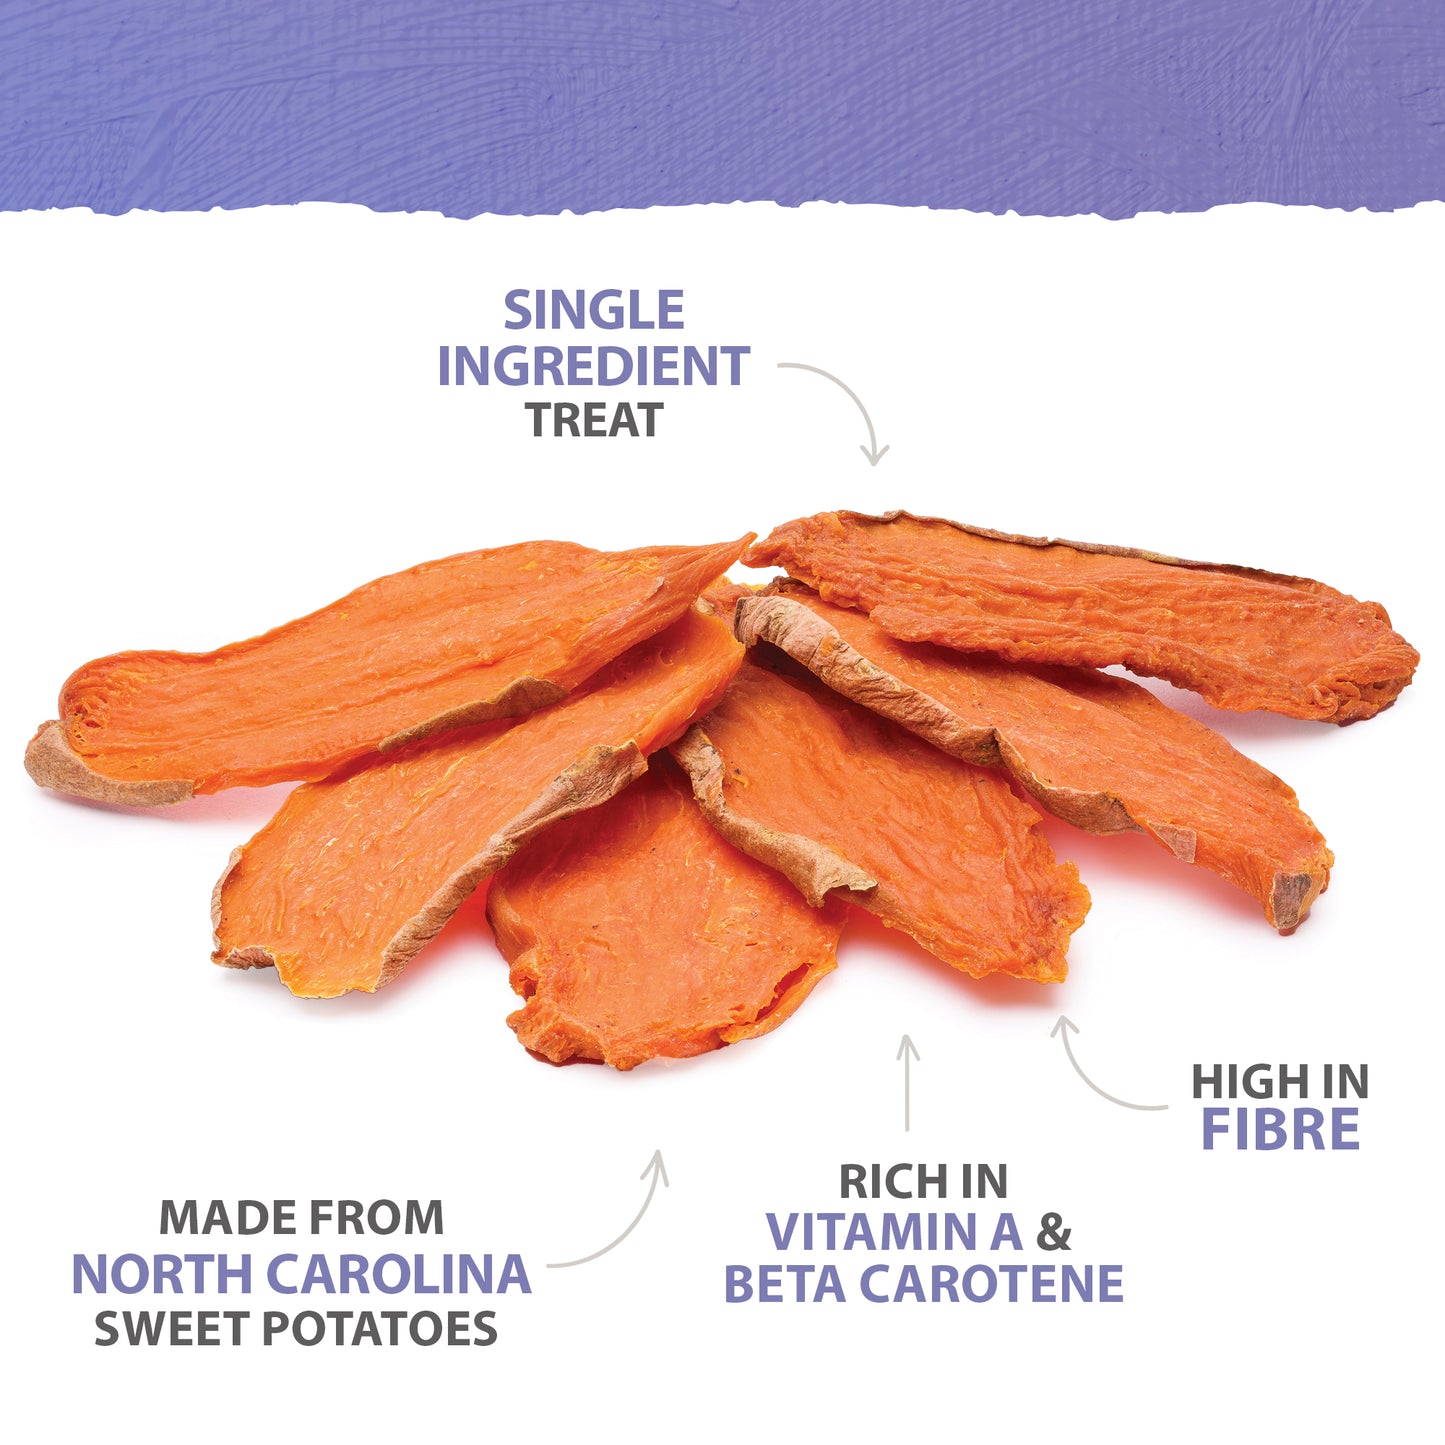 
                        
                          Sweet Potato Chews Value Pack
                        
                      